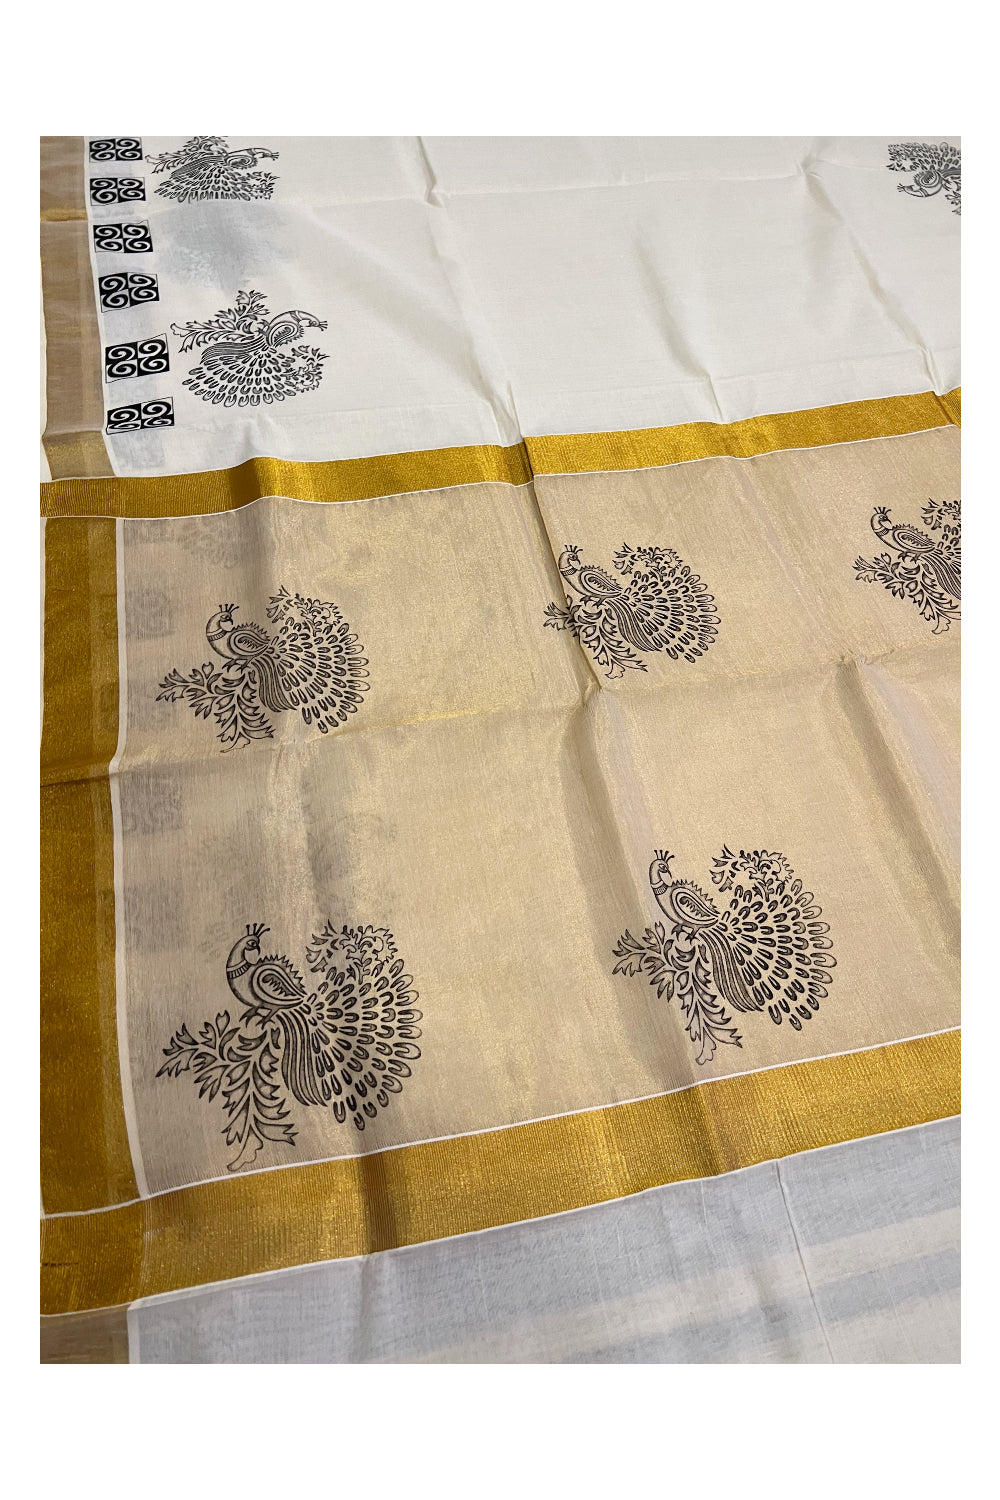 Kerala Cotton Kasavu Saree with Black Peacock Block Prints on Border and Tissue Pallu